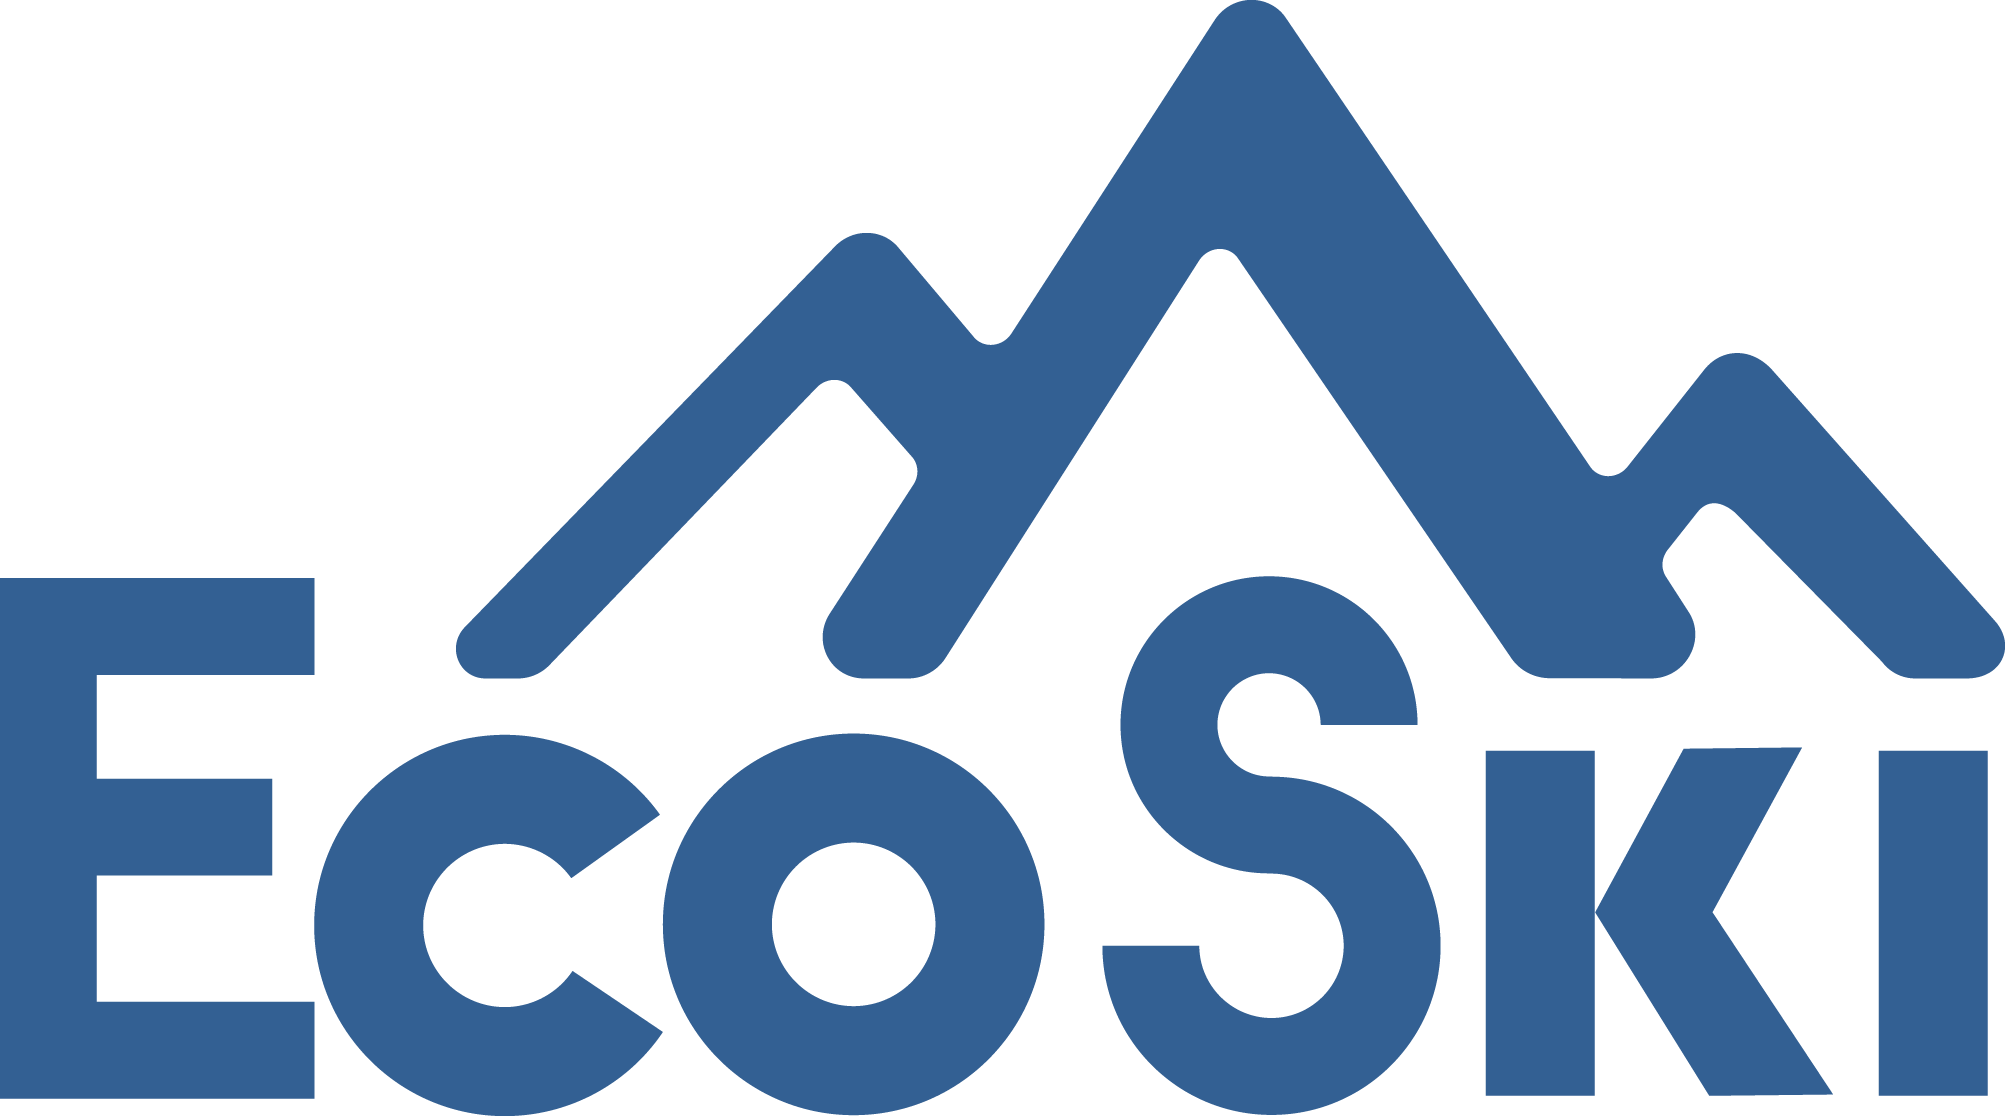 eco-ski-logo